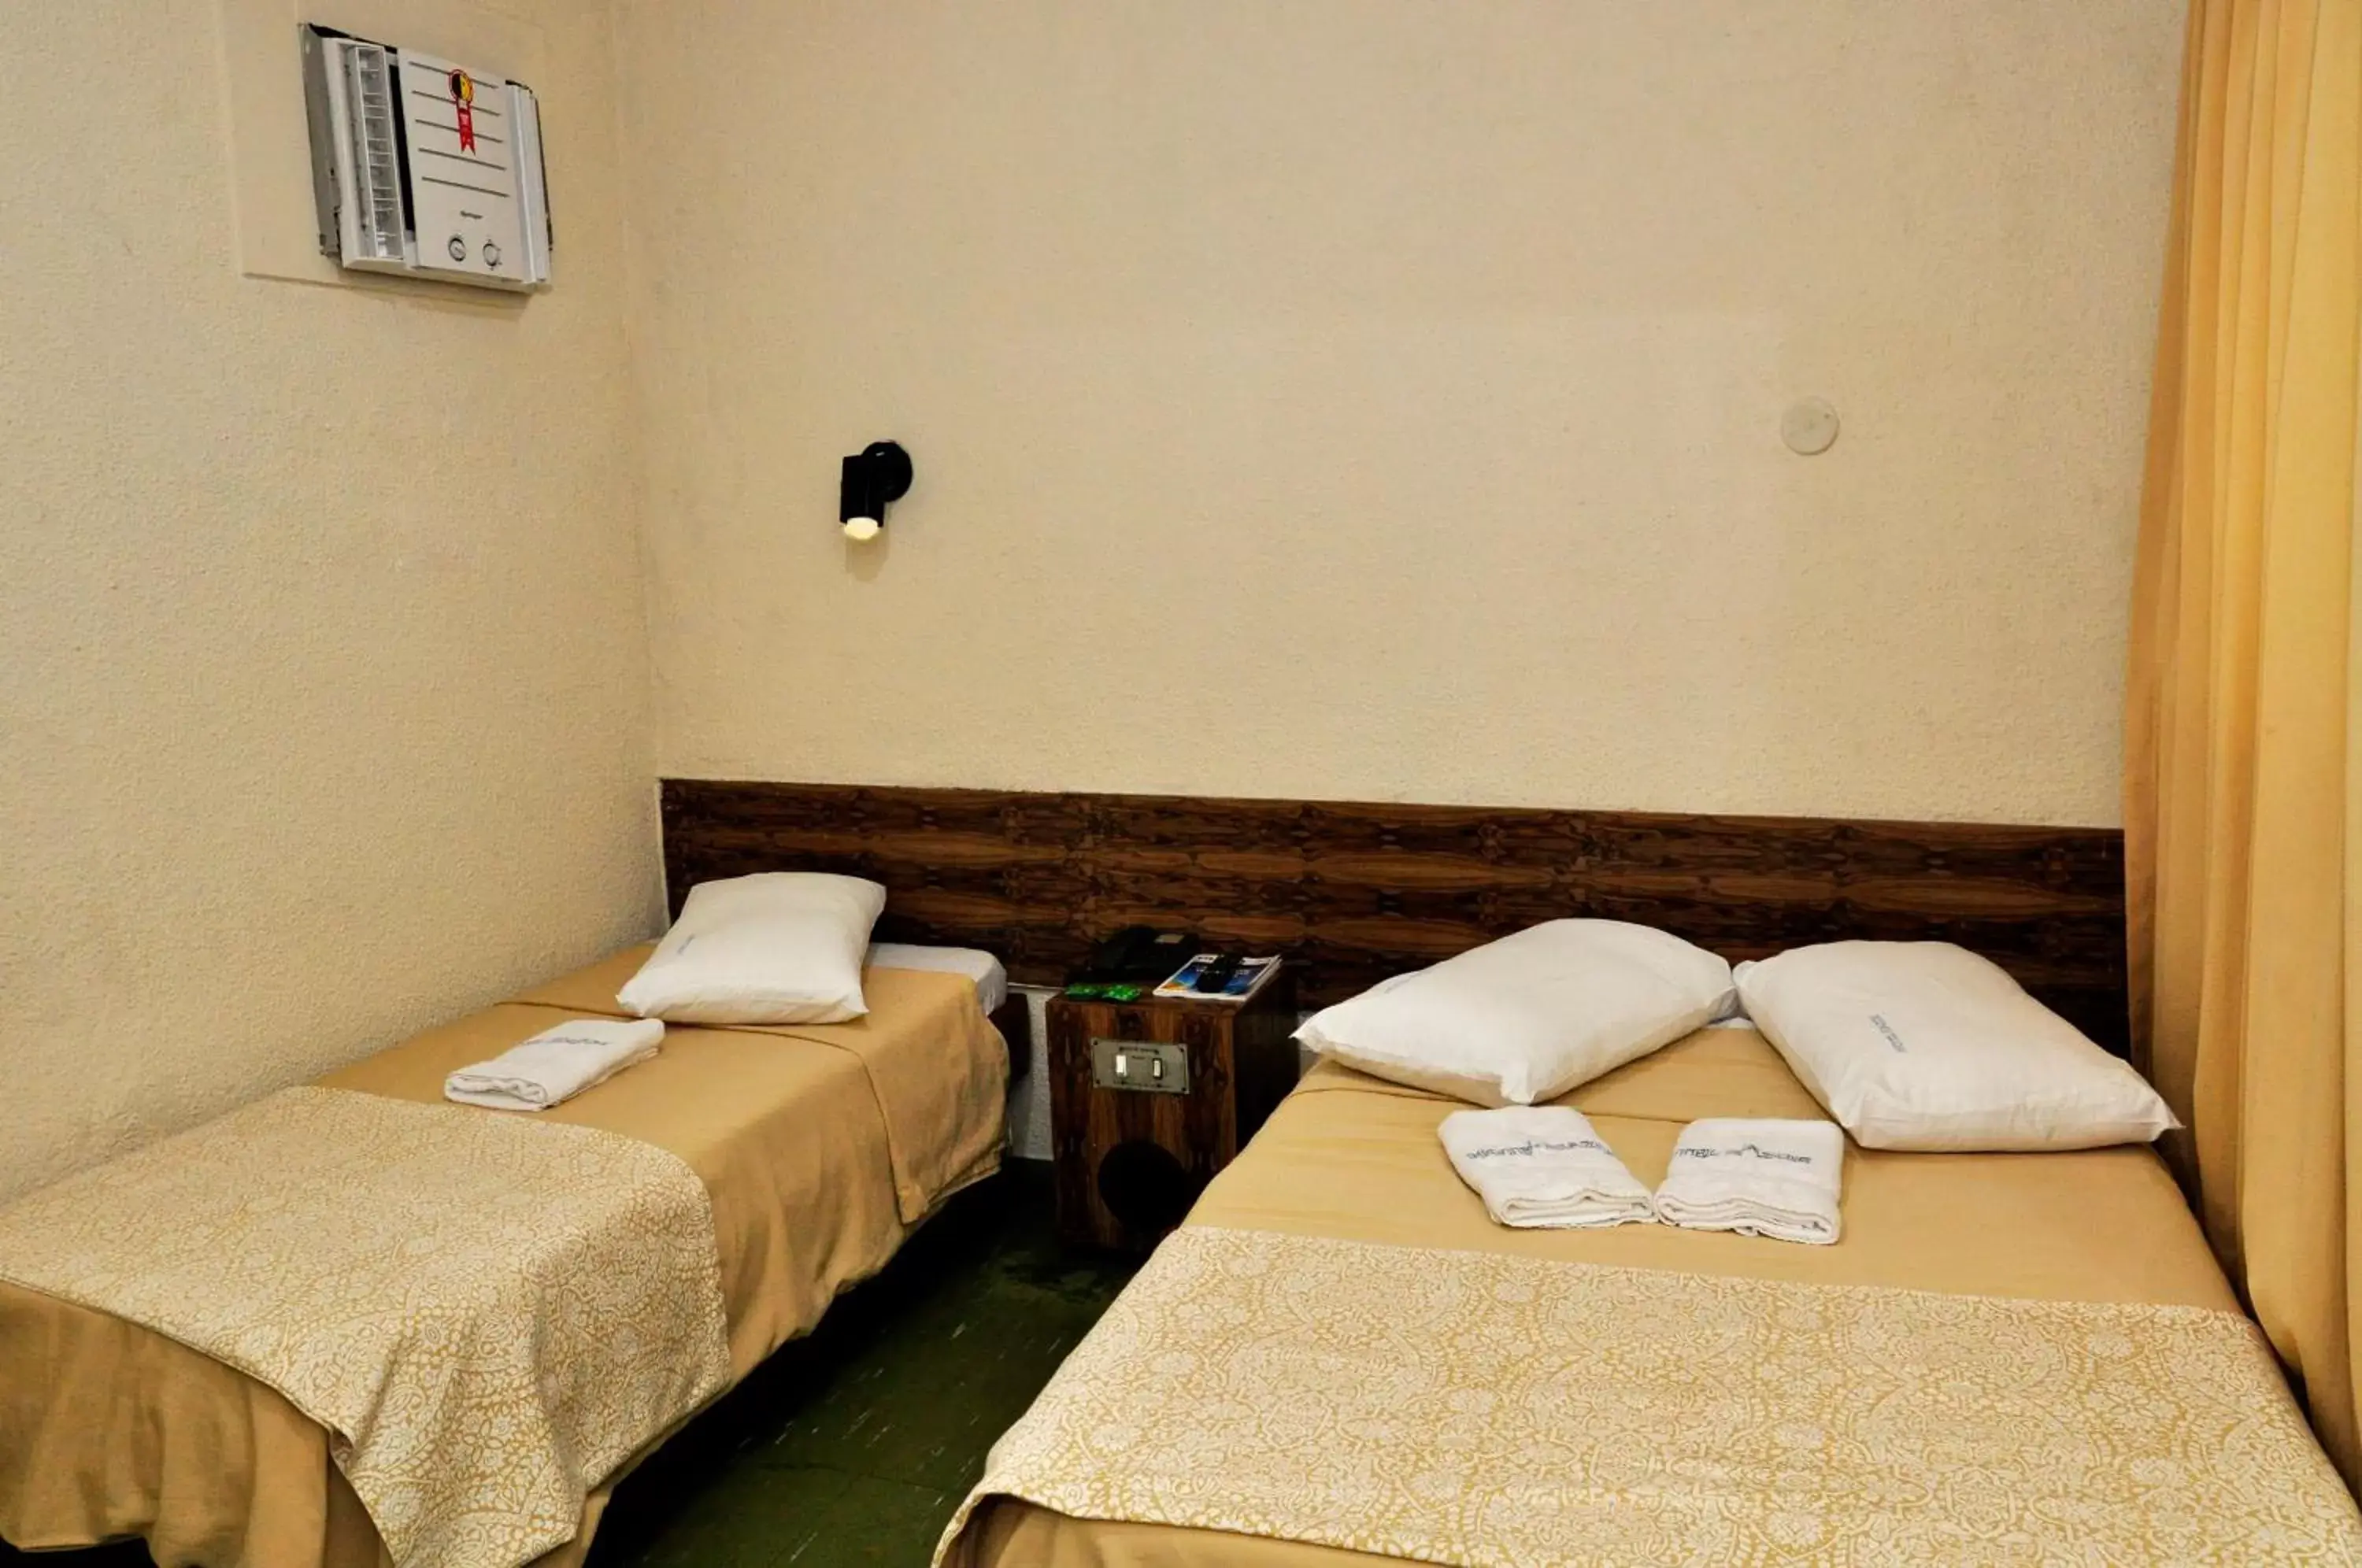 Bedroom, Room Photo in Hotel Plaza Riazor